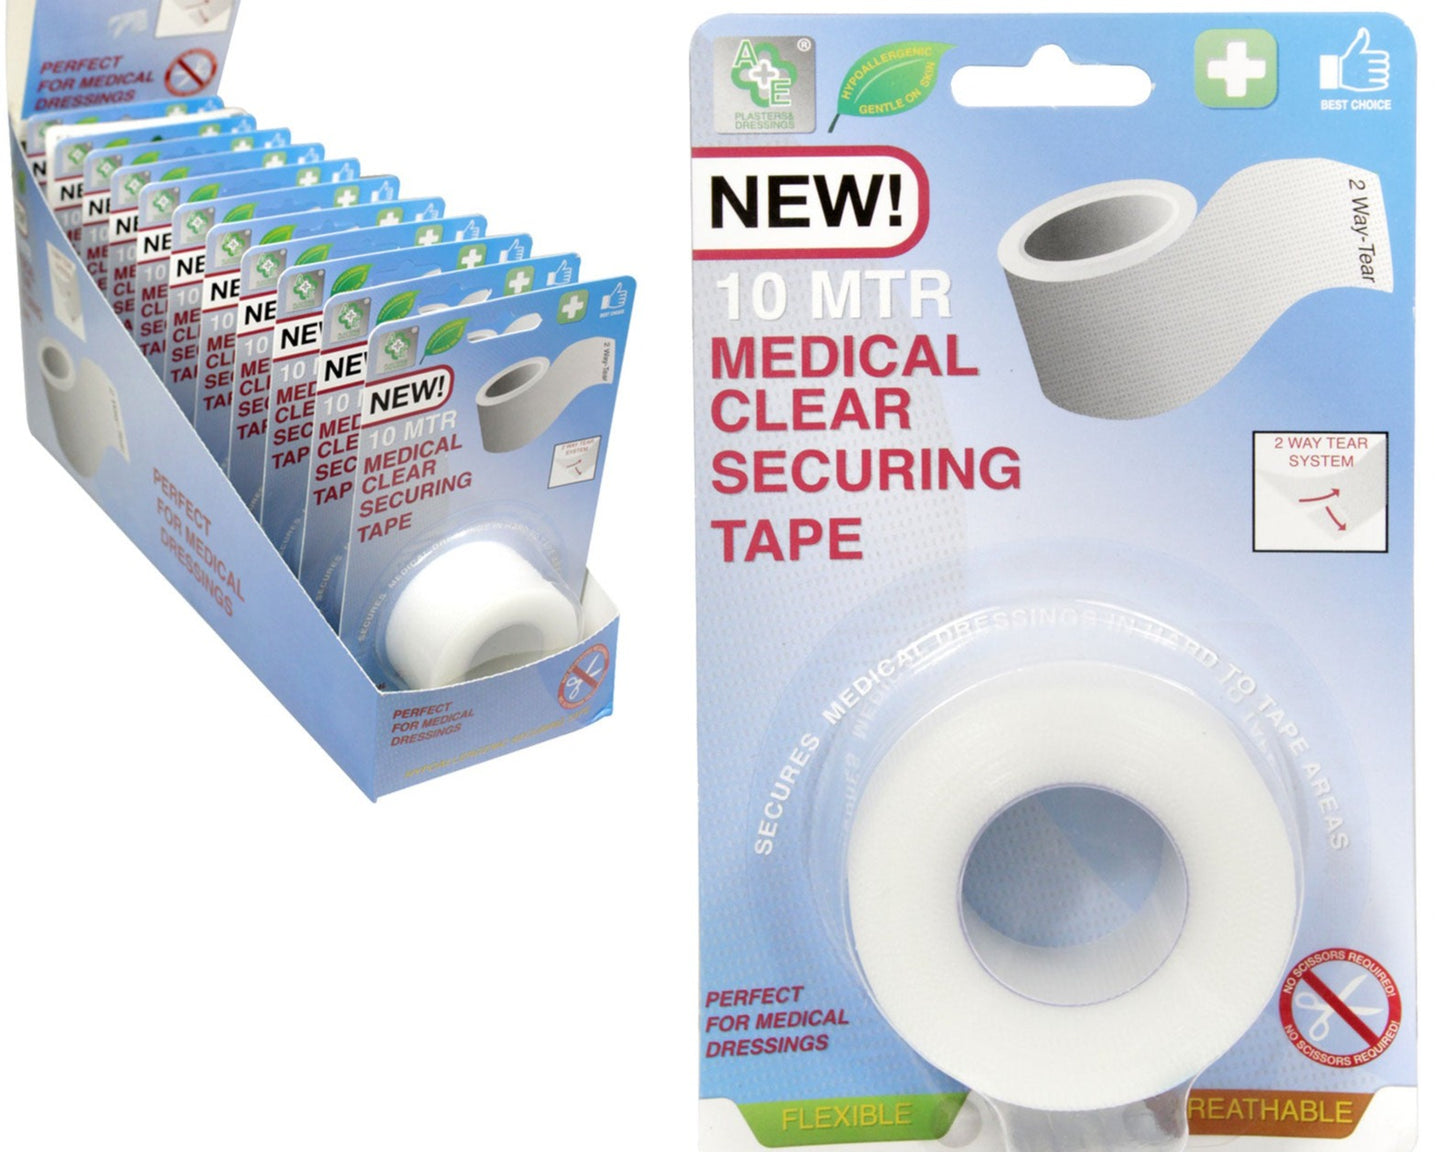 £1.49 Medical Securing Tape (12)